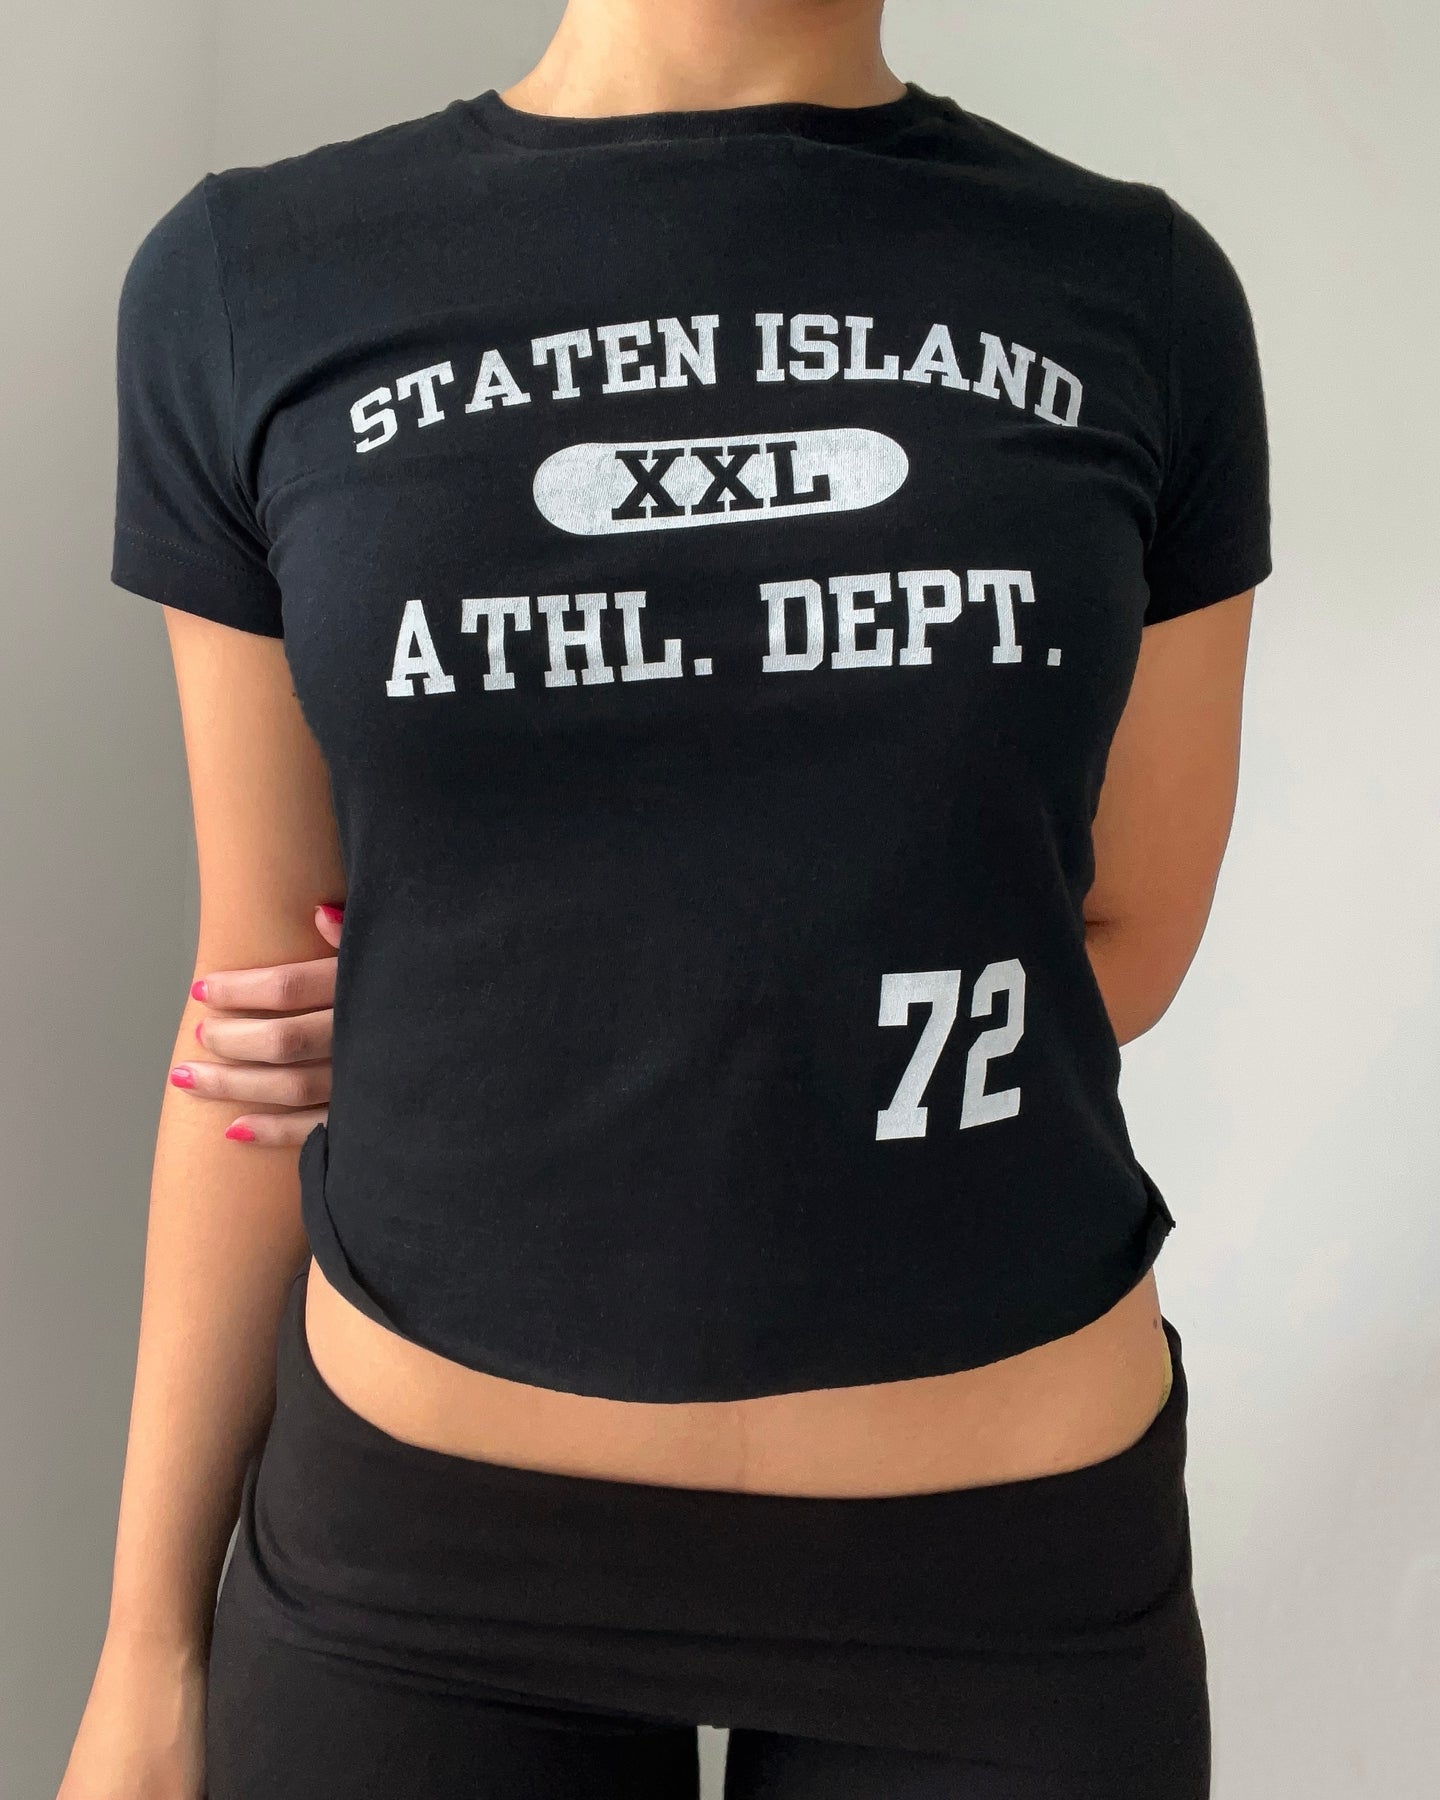 Staten Island Athl. Dept. baby tee (full length)